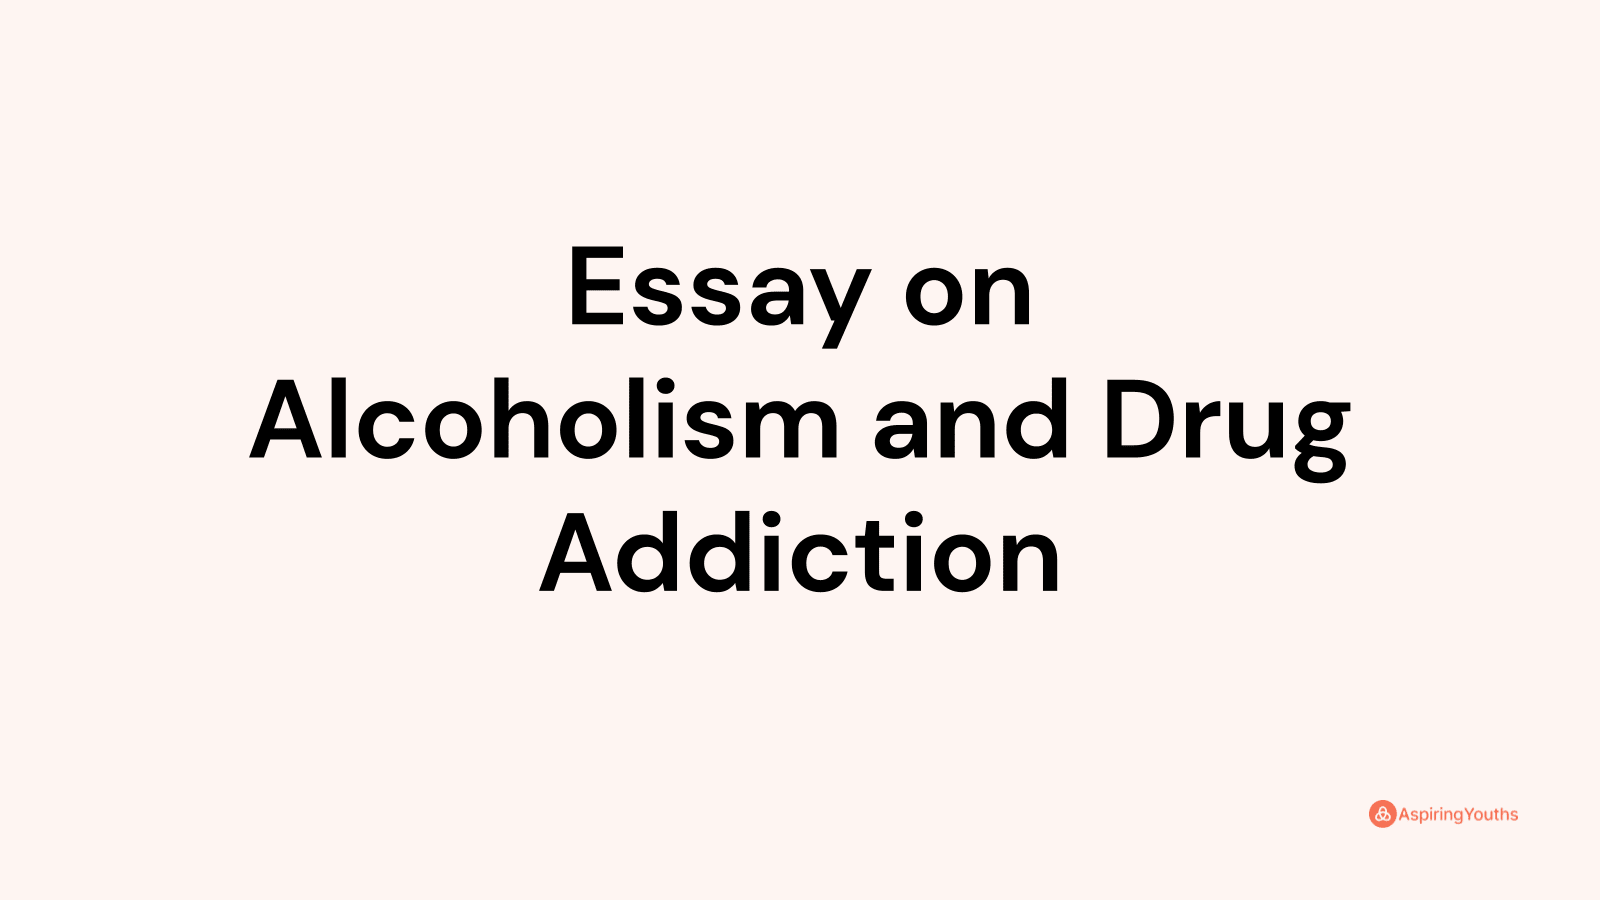 Essay on Alcoholism and Drug Addiction